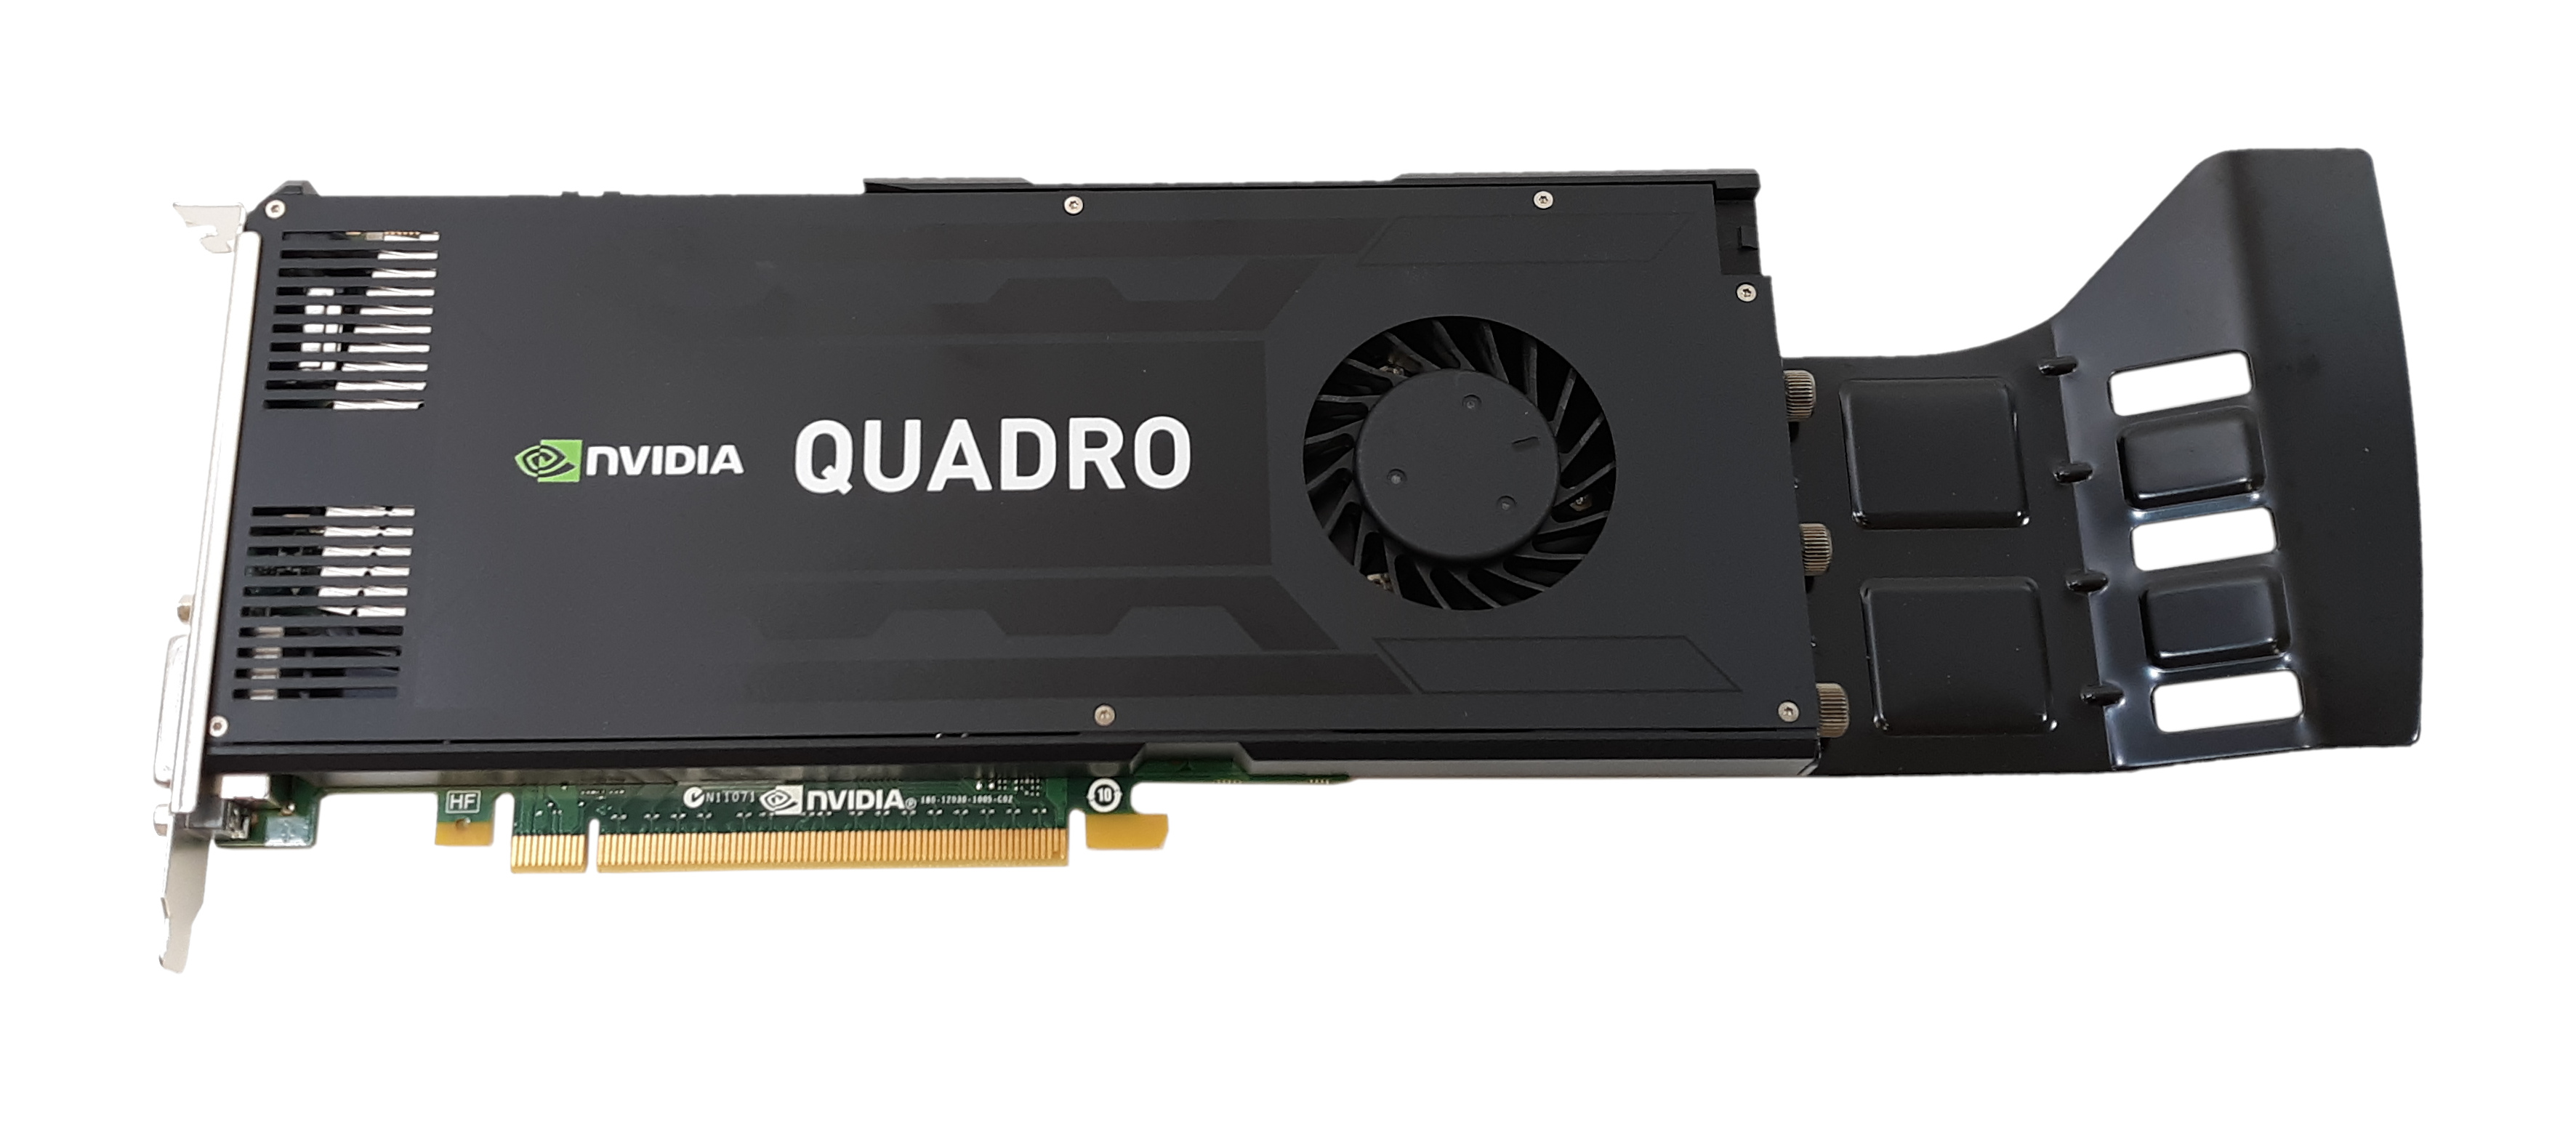 HP nVIDIA Quadro K4000 GPU 3GB PCIE x16 Dual DP/DVI 700104-001 713381-001 C2J94AT